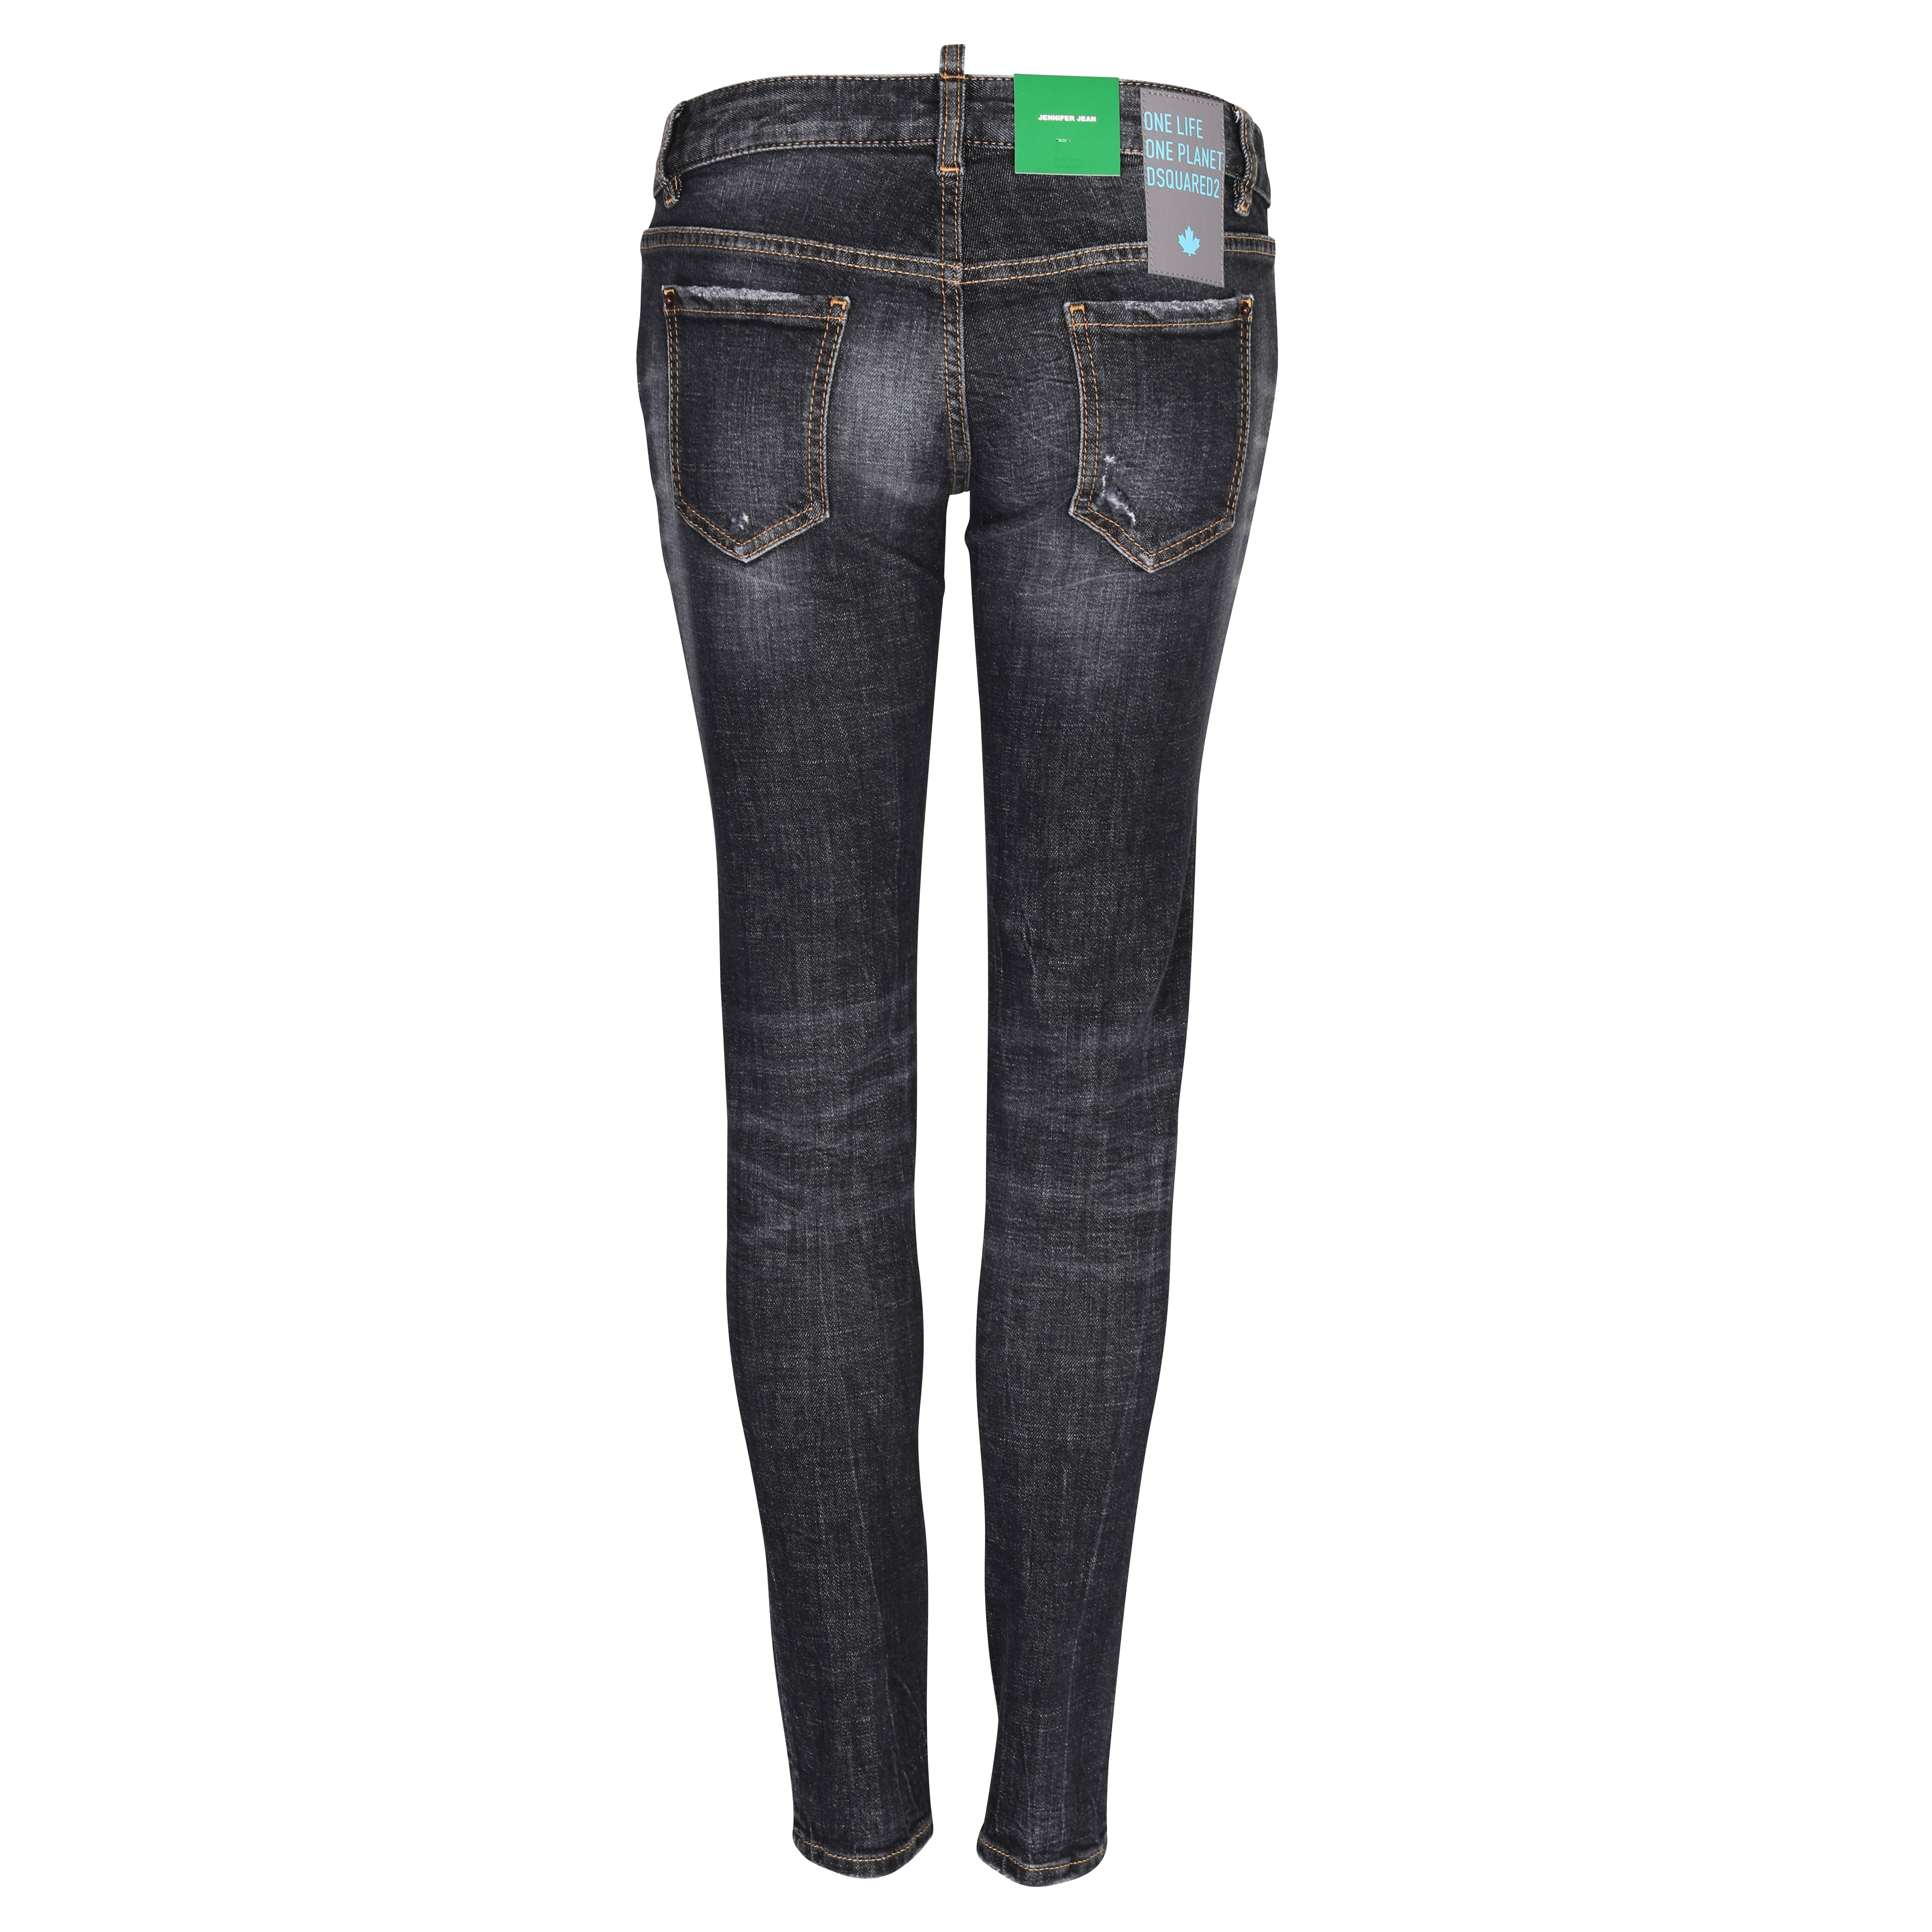 DSQUARED2 Green Label Jennifer Jeans in Washed Black IT 40 / DE 34